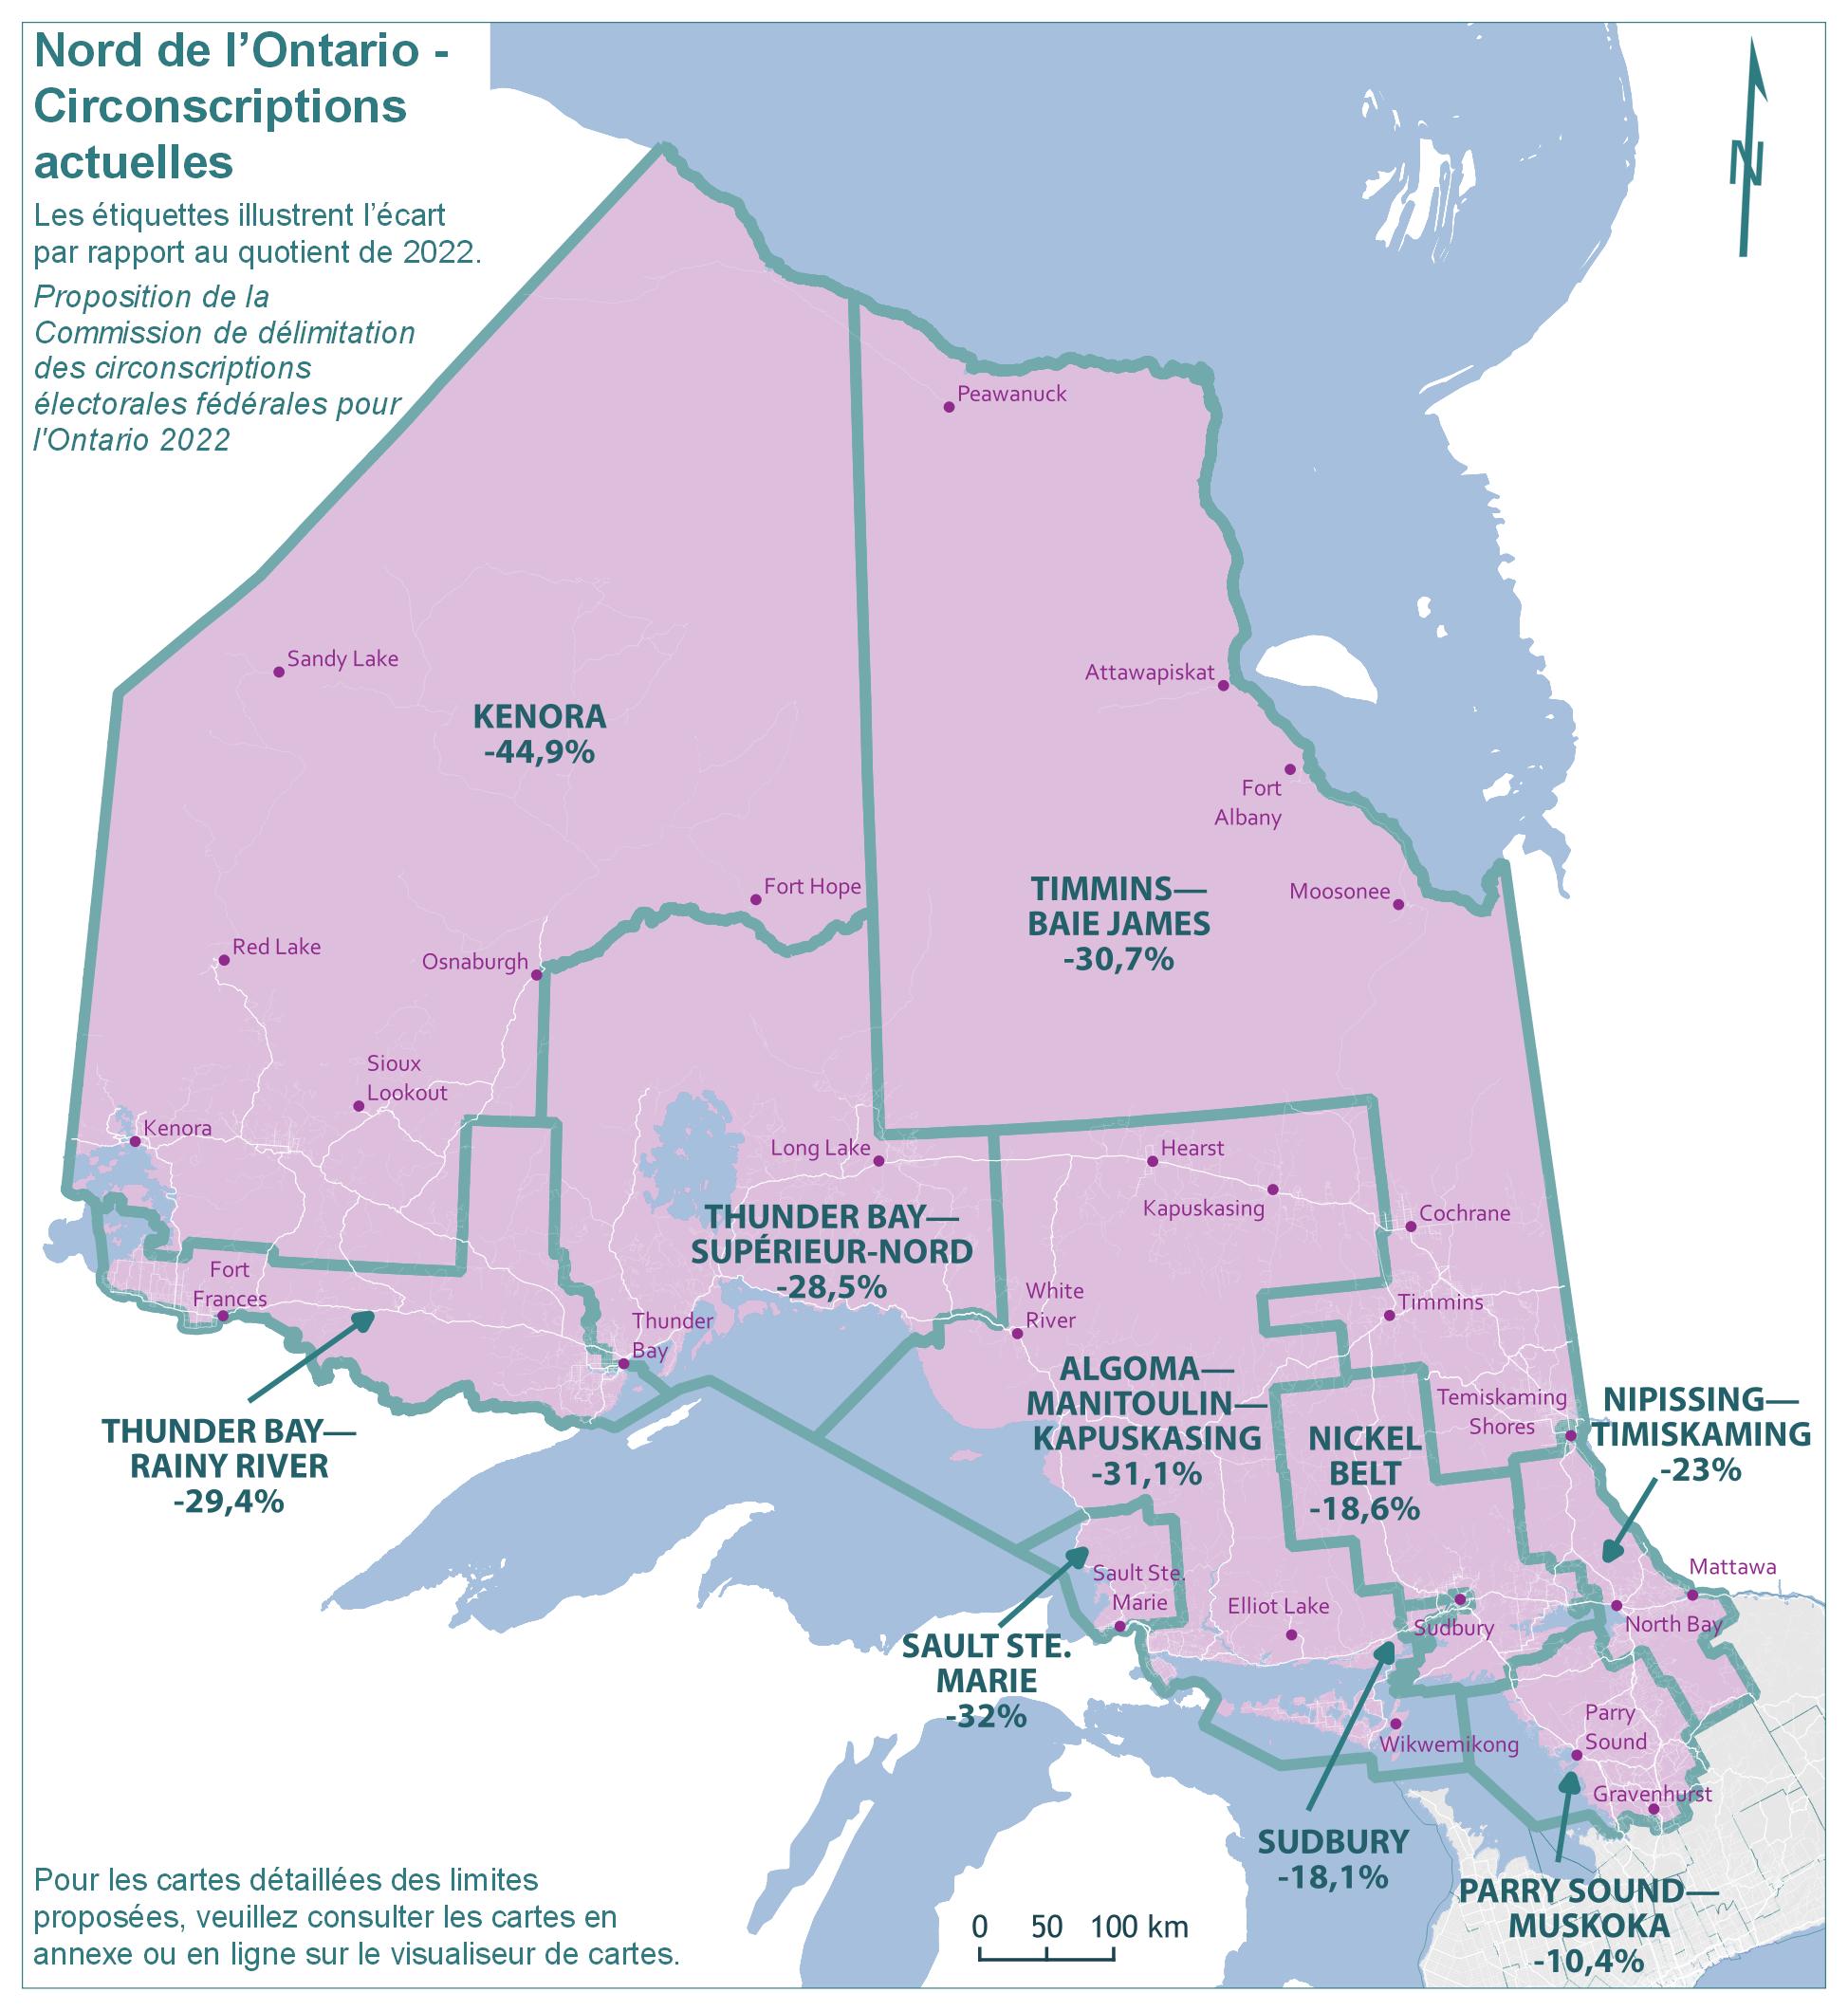 Nord de l'Ontario – Circonscriptions actuelles